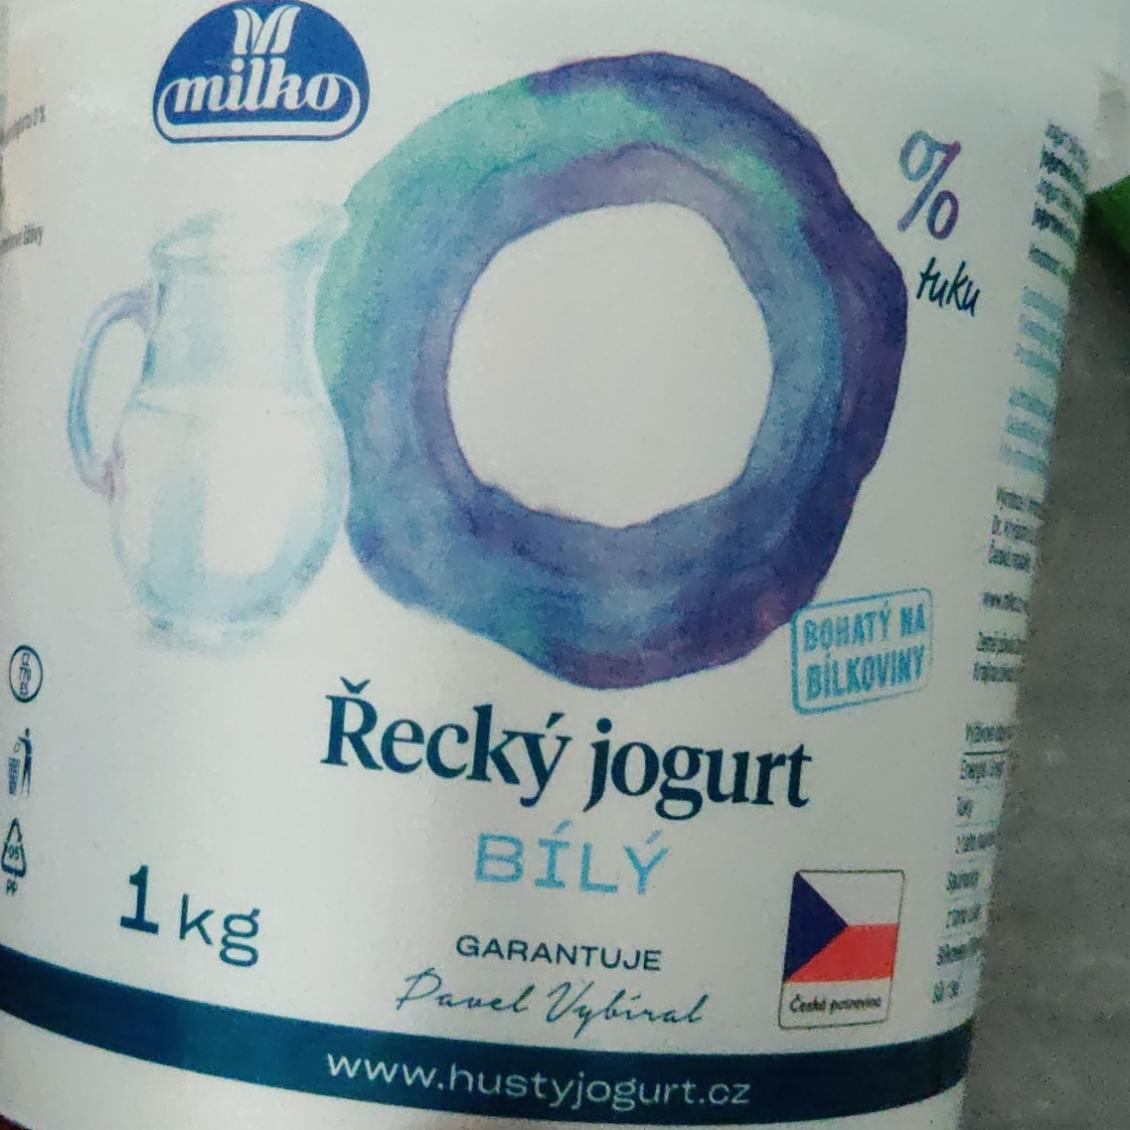 Zdjęcia - recky jogurt bily 0% tuku milko